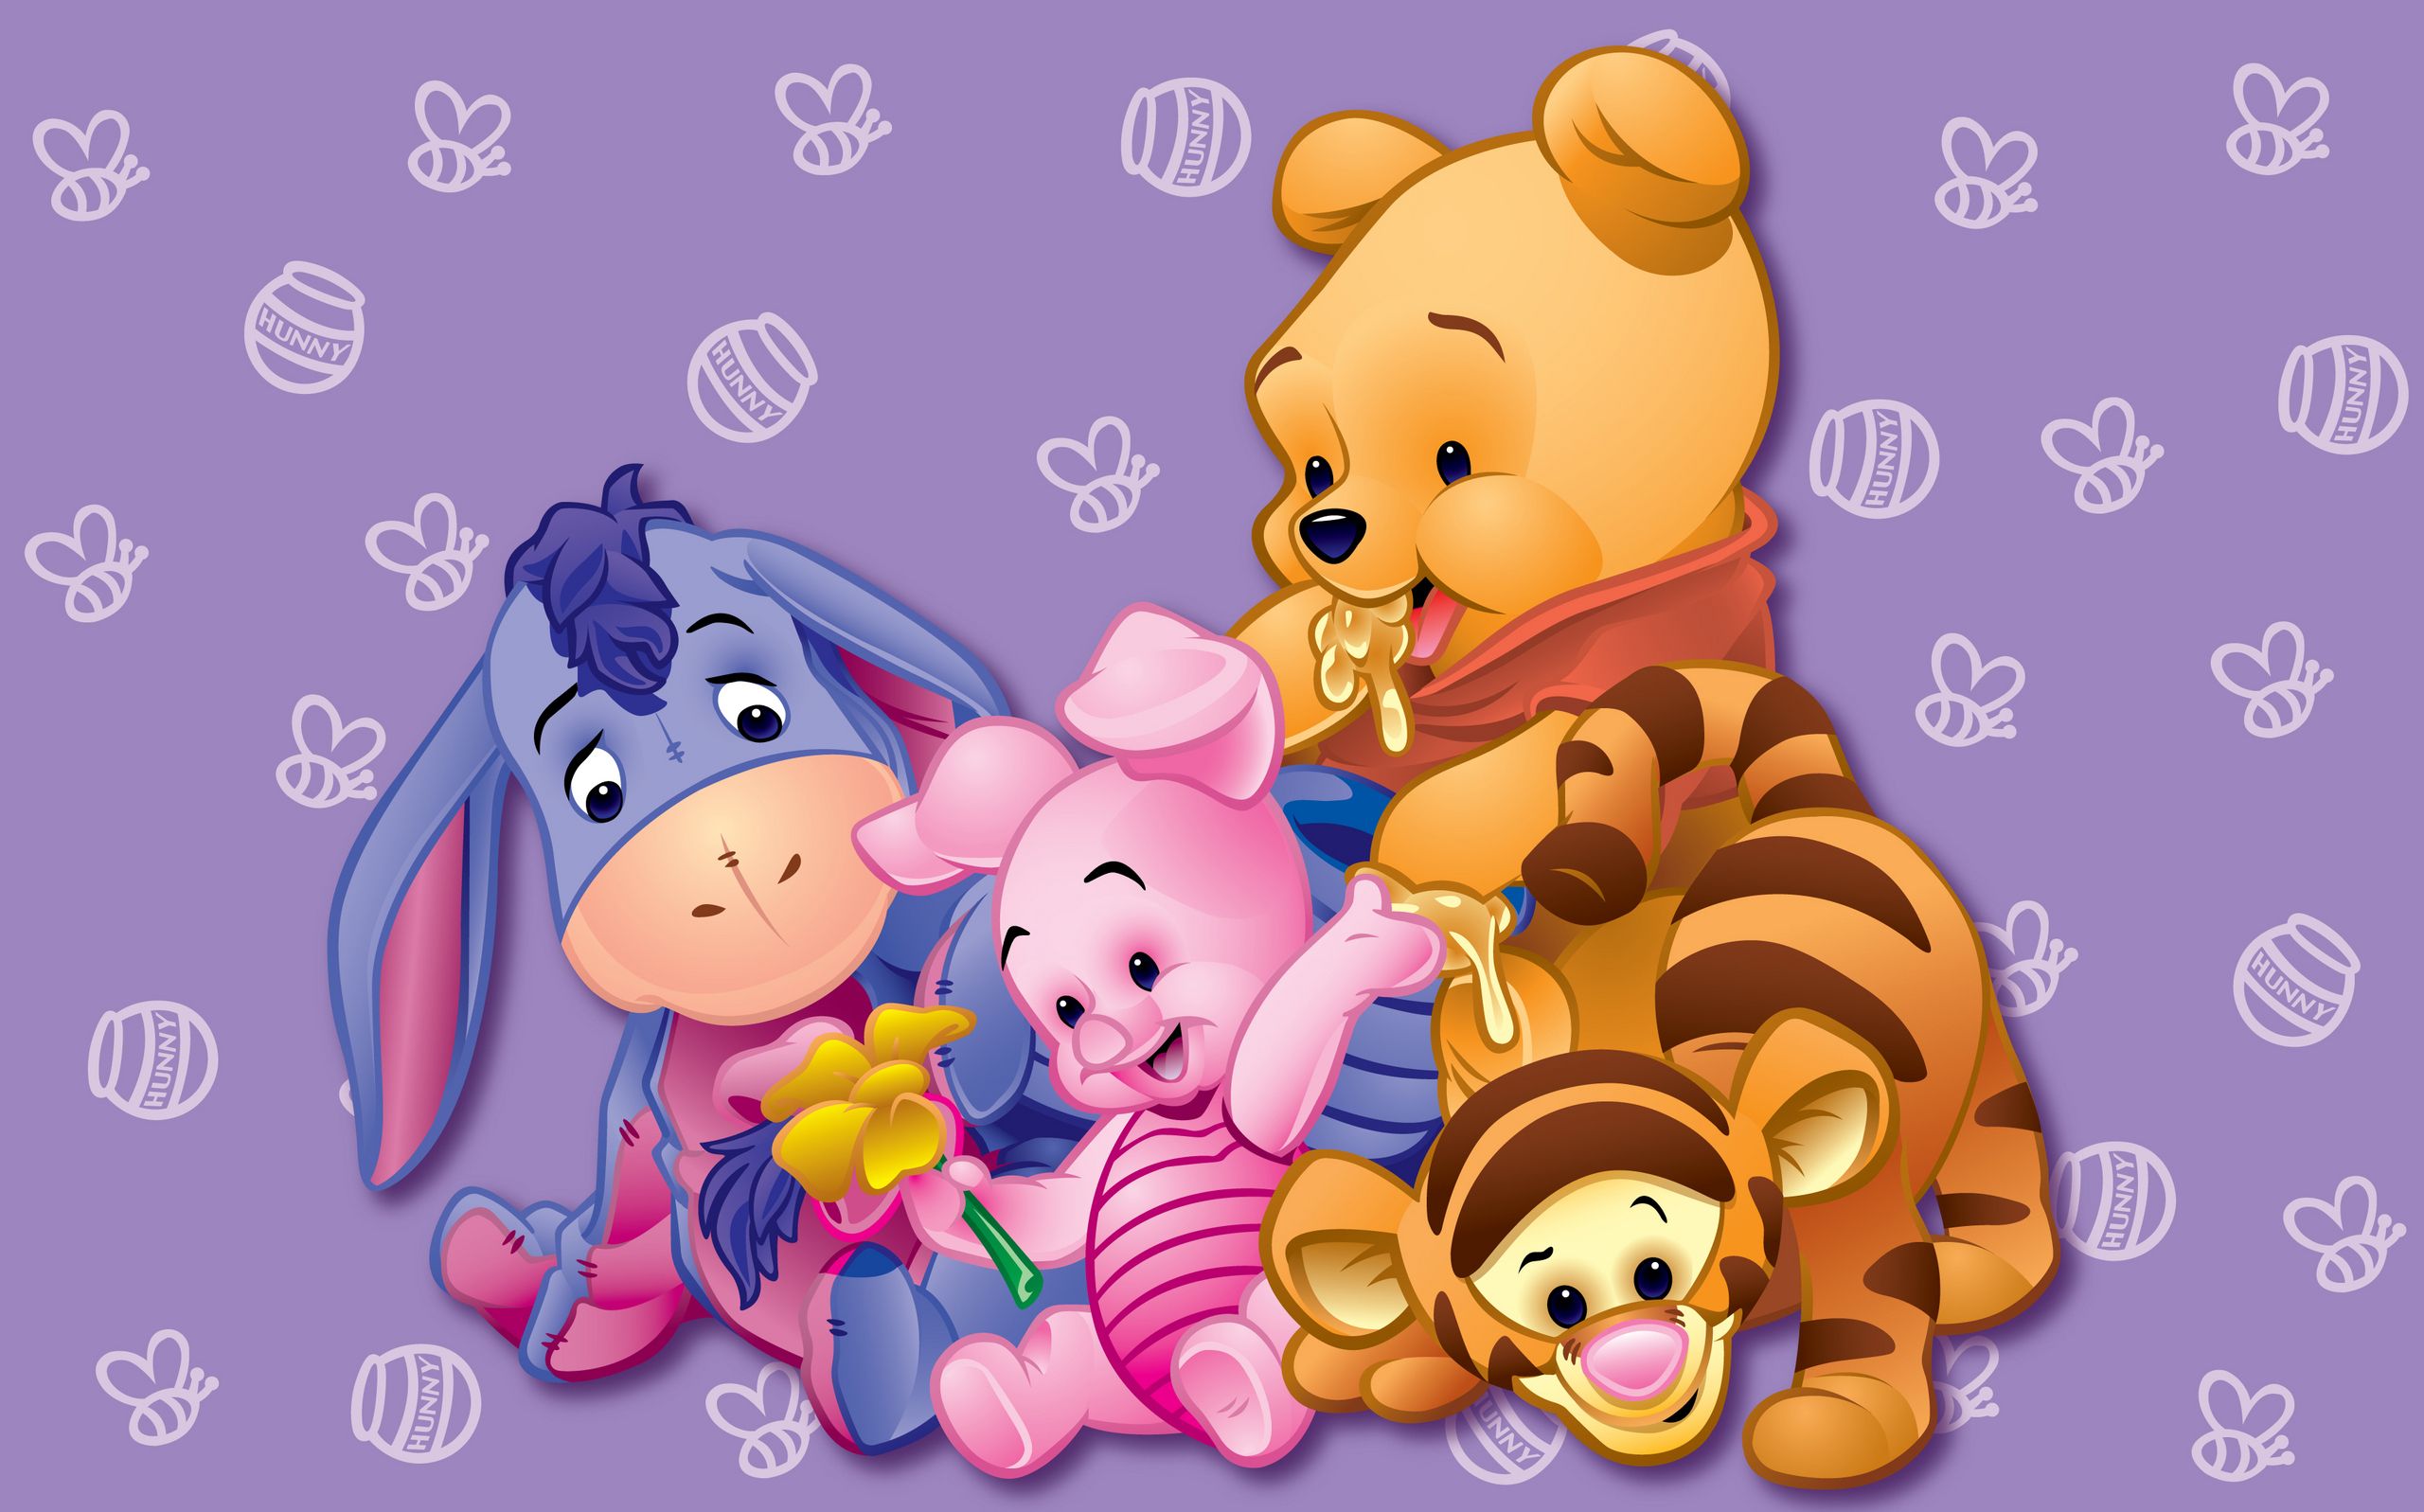 Pooh Wallpaper. Pooh Wallpaper, Winnie the Pooh Wallpaper and Winnie the Pooh and Tigger Wallpaper